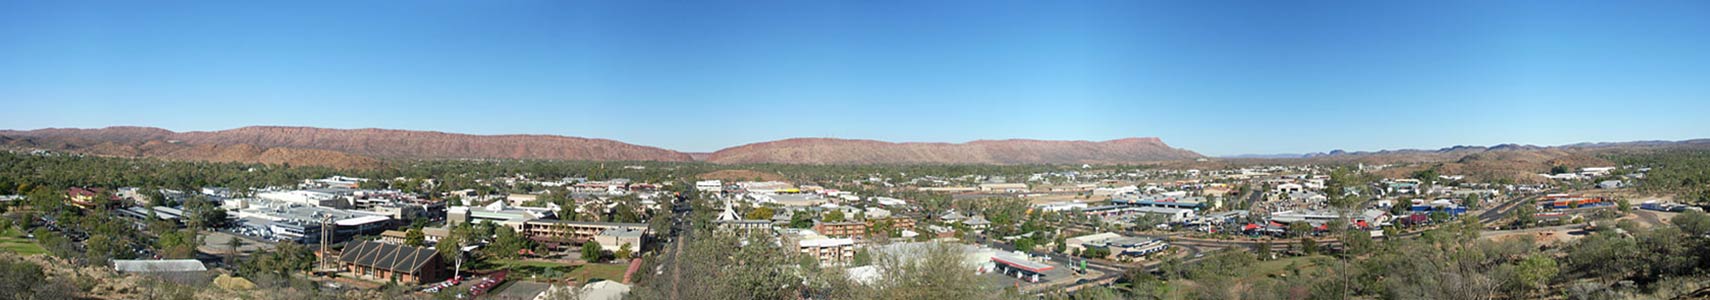 Panorama of Alice Springs, Northern Territory (NT), Australia